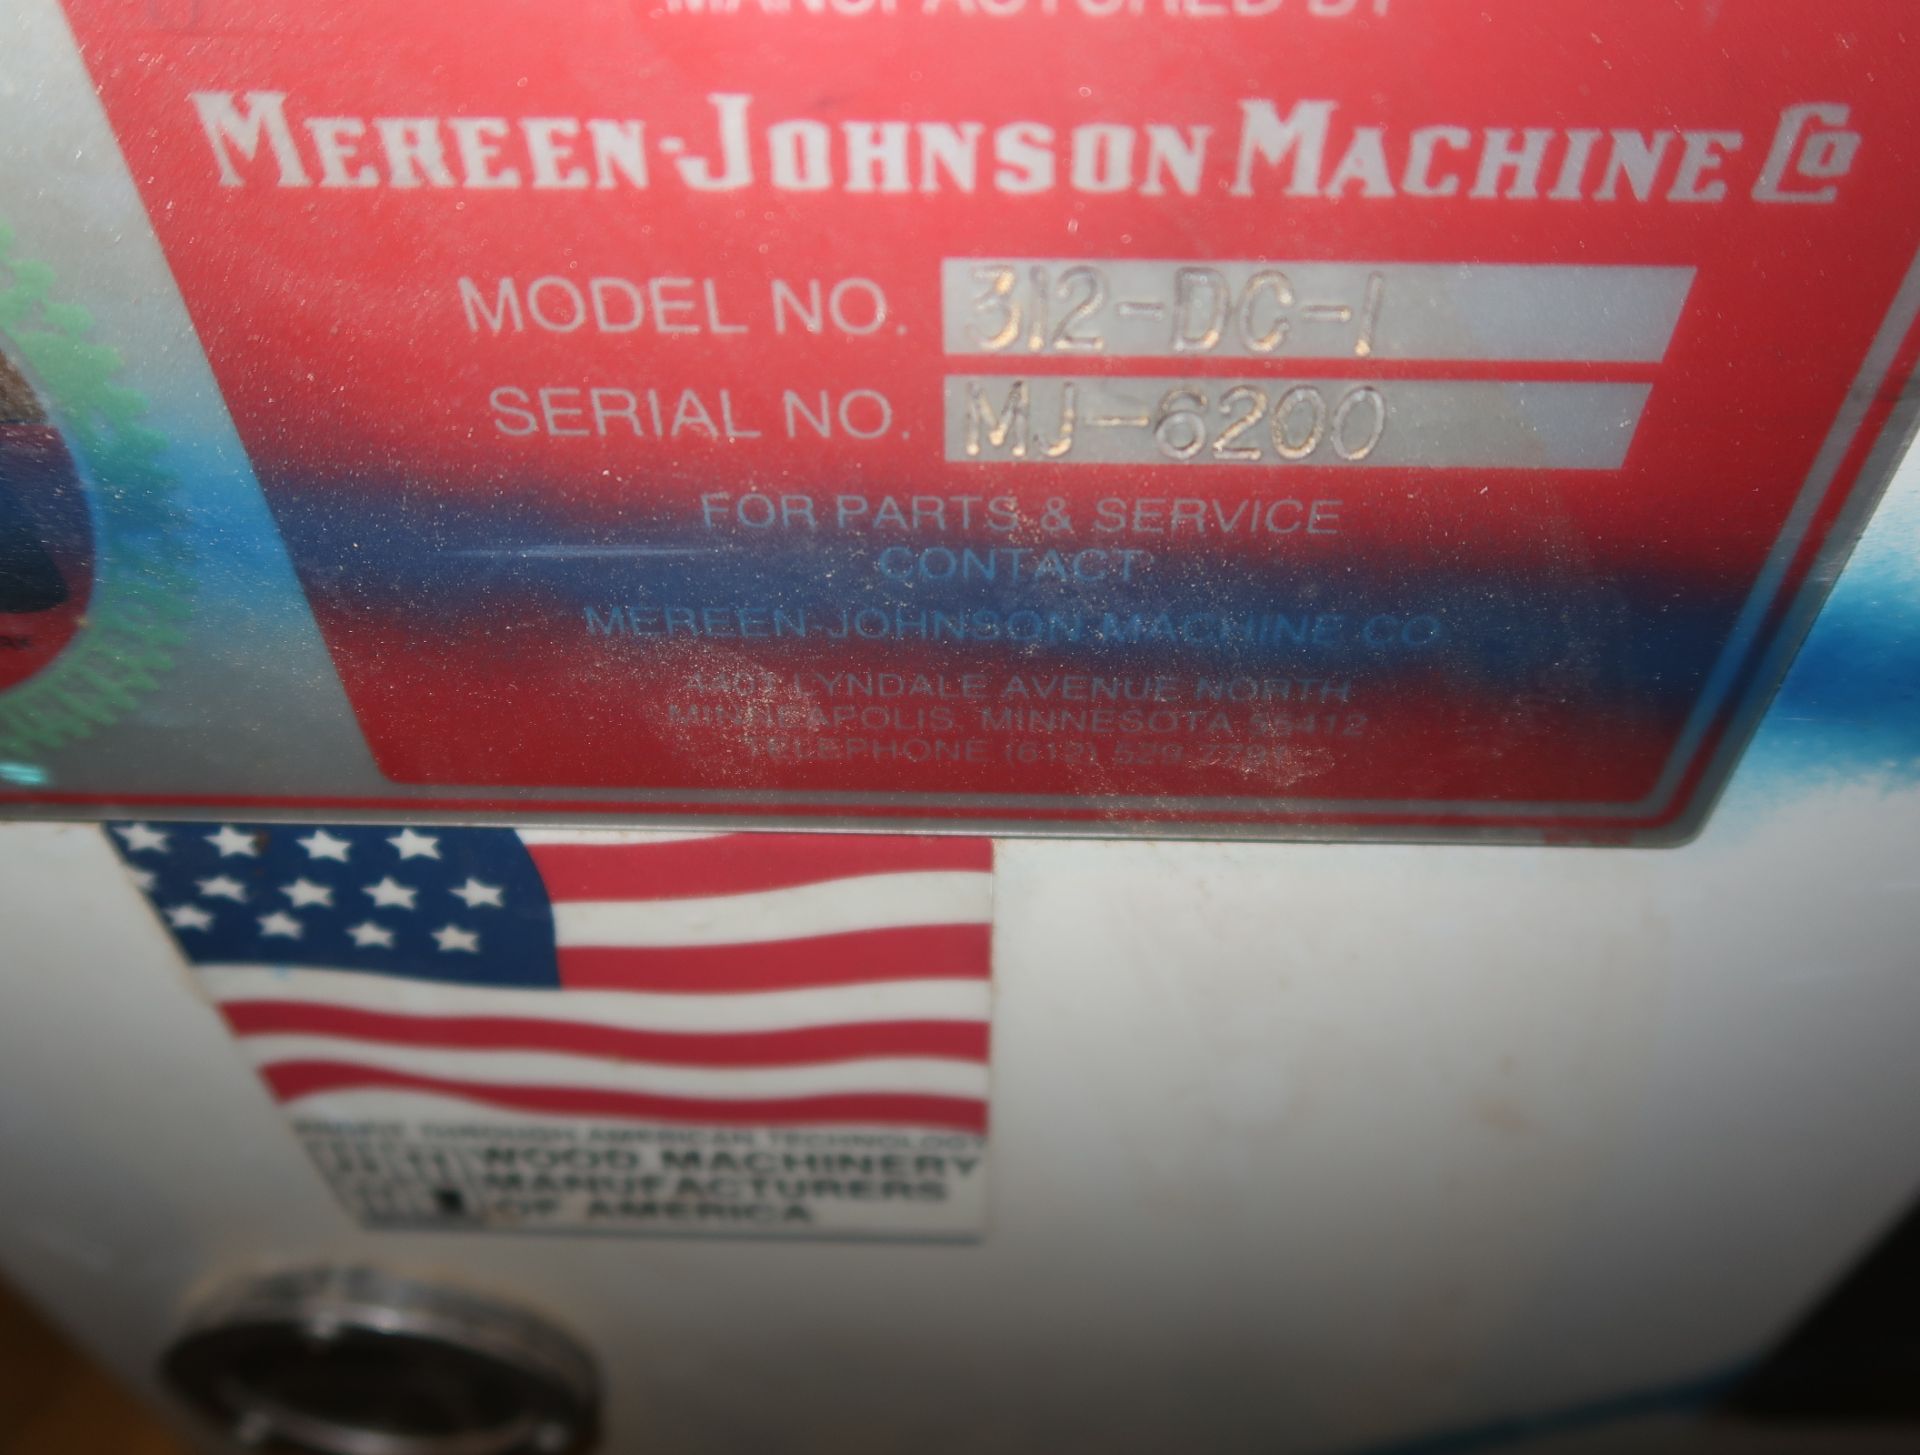 MEREEN-JOHNSON 312-DC-1 GANG RIP SAW, SN. MJ-6200, 480V 3PH - Image 3 of 5